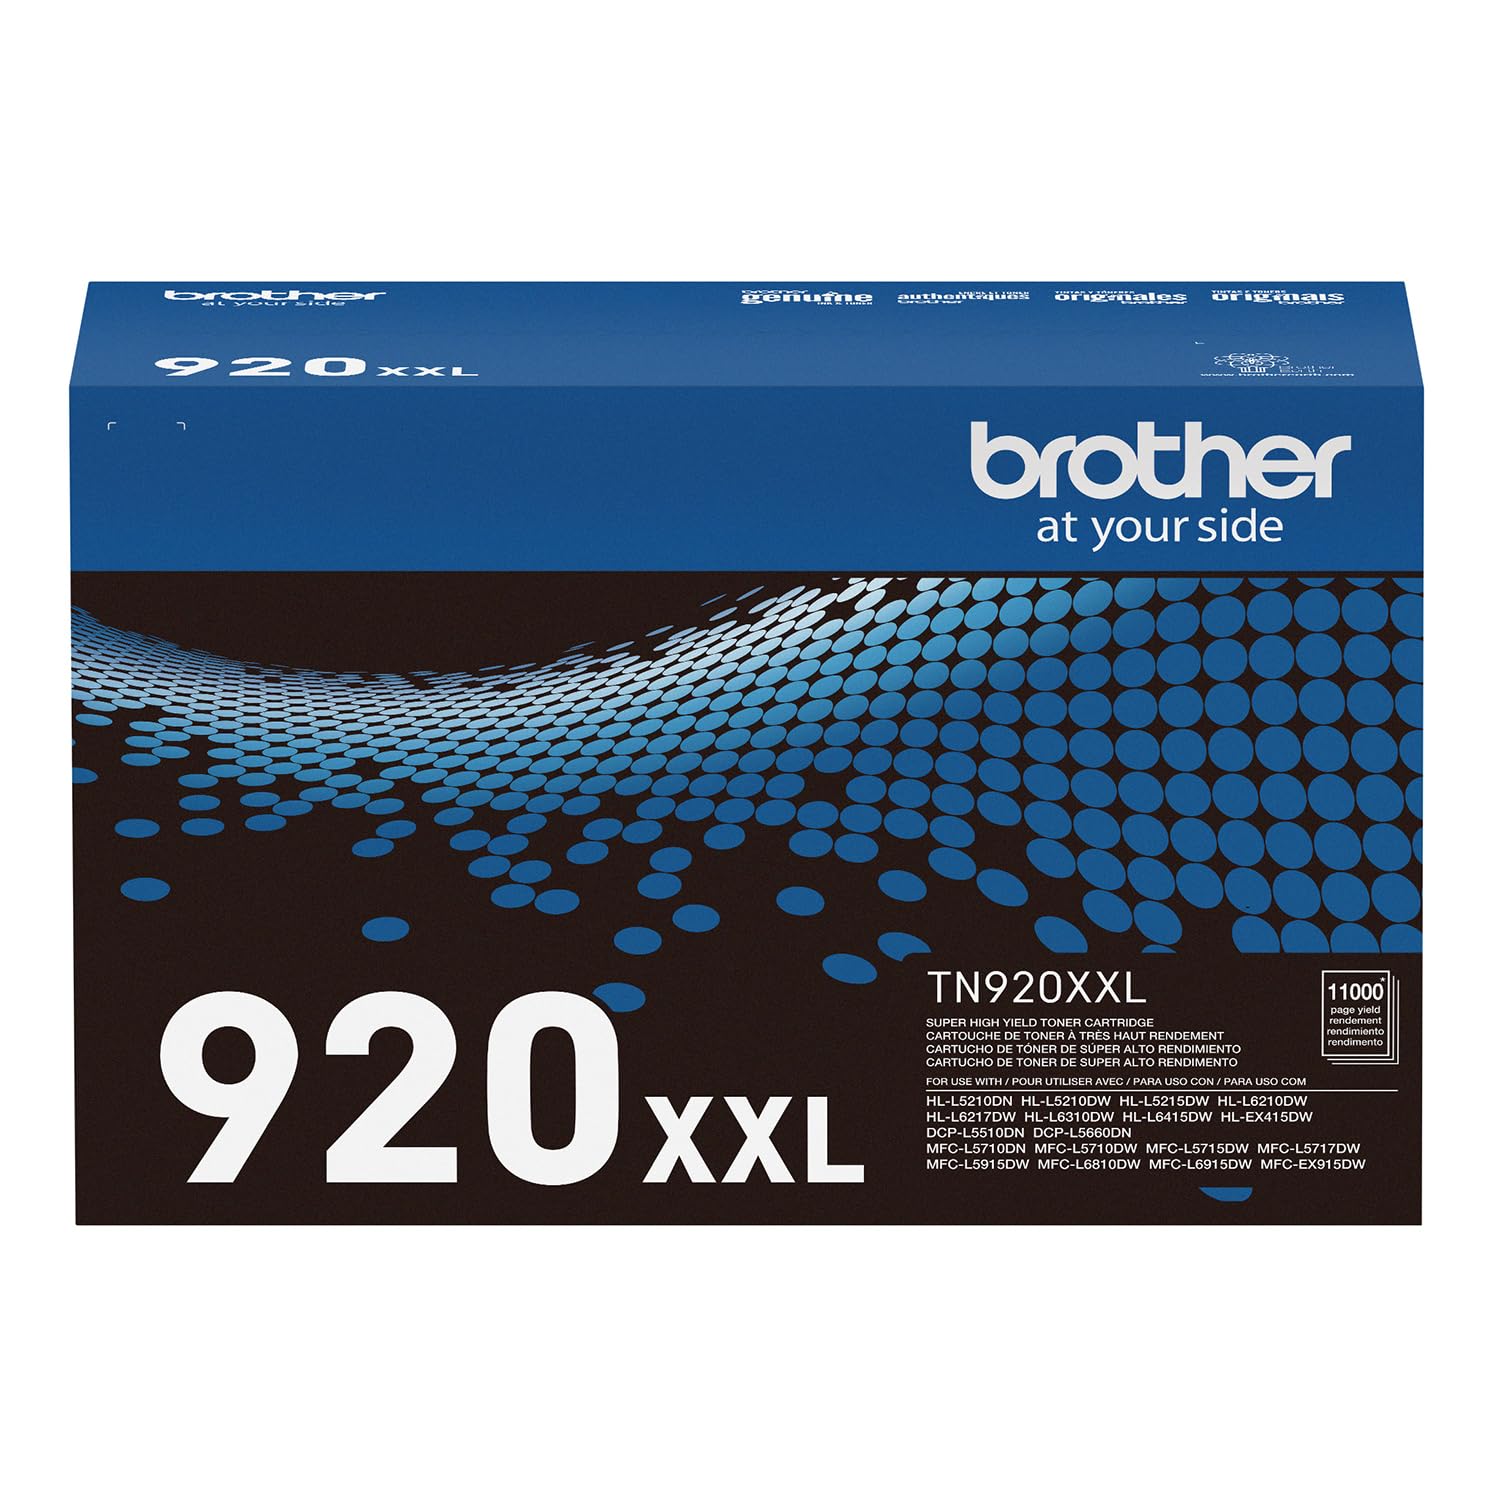 Brother Genuine Cartridge TN920XXL Super High Yield Black Toner,1 Pack, HL-L5210DN, HL-L5210DW, HL-L5210DWT, HL-L5215DW, HL-L6210DW, HL-L6210DWT, HL-L6310DW,MFC-L6810DW